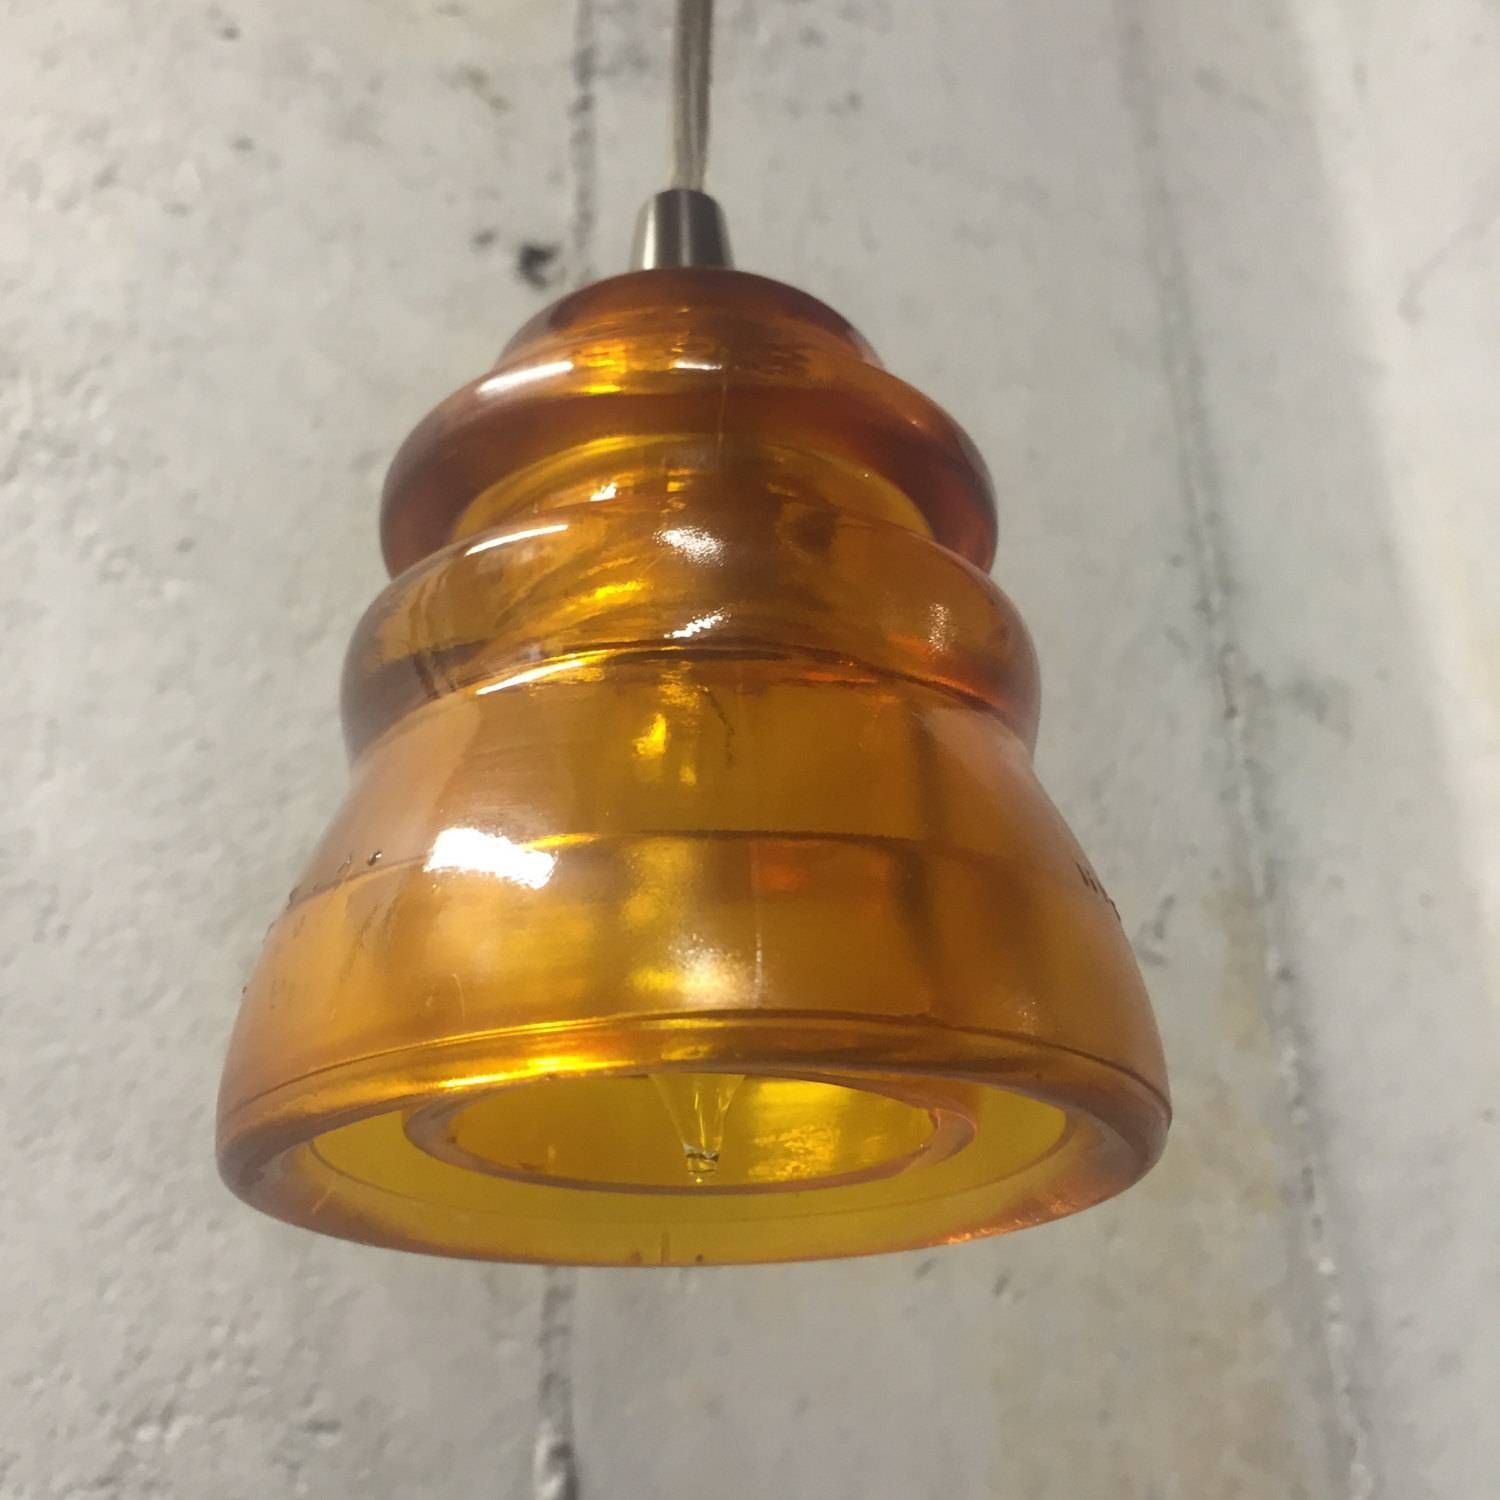 Insulator Lighting Chandelier Vintage 1920's 60's Repurposed Pertaining To Insulator Pendant Lights (View 7 of 15)